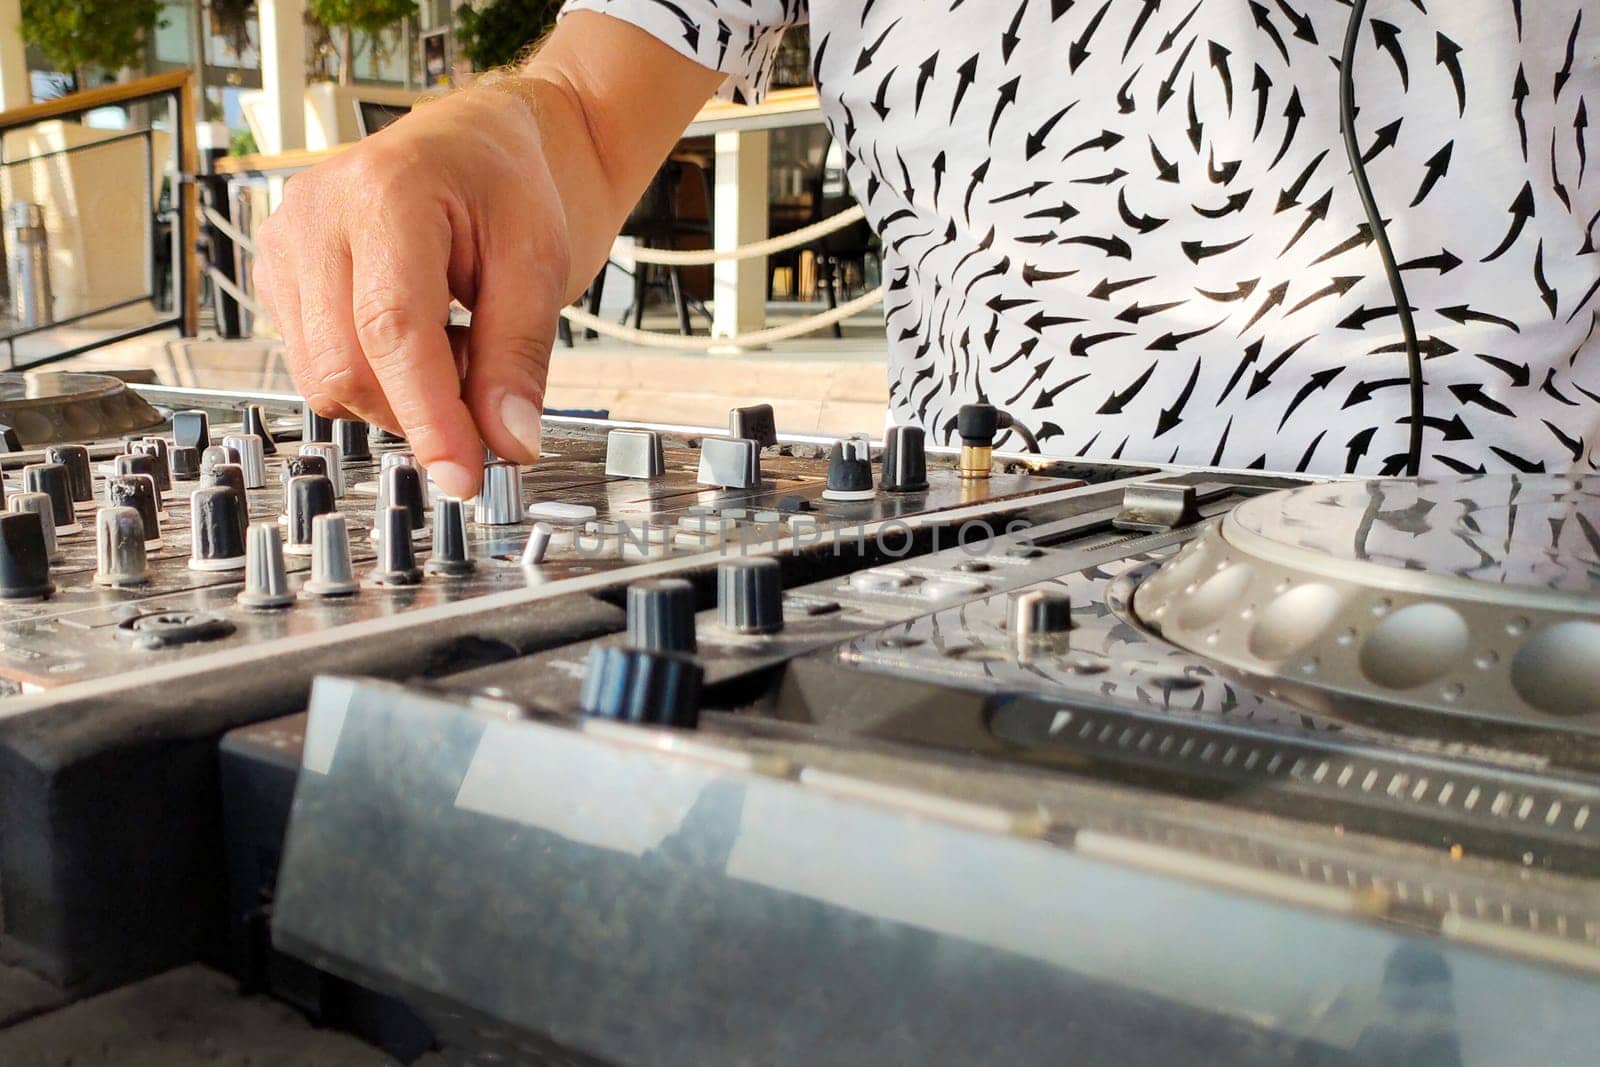 Turkey, Alanya - August 12, 2022: DJ creates music on mixing player by Laguna781